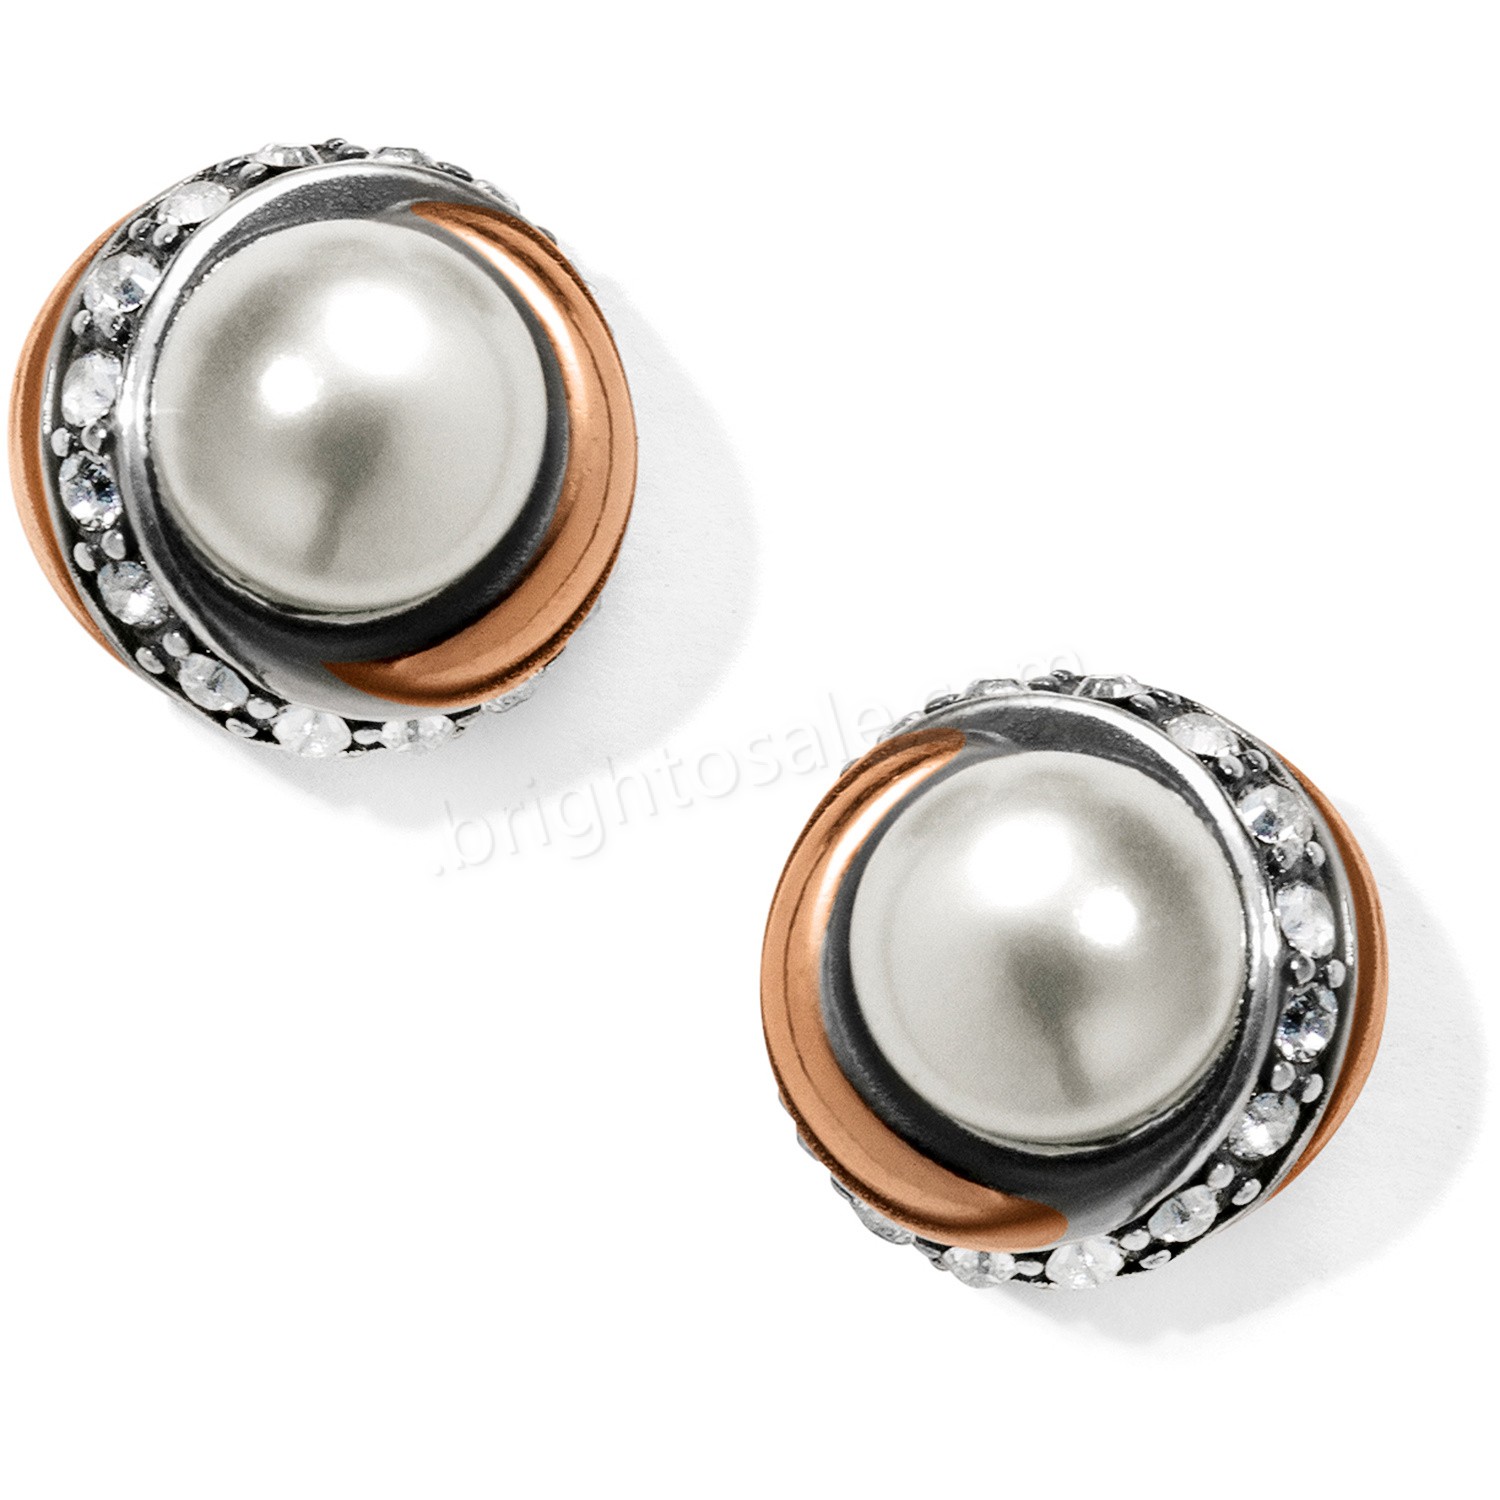 Brighton Collectibles & Online Discount Neptune's Rings Pearl Button Earrings - Brighton Collectibles & Online Discount Neptune's Rings Pearl Button Earrings